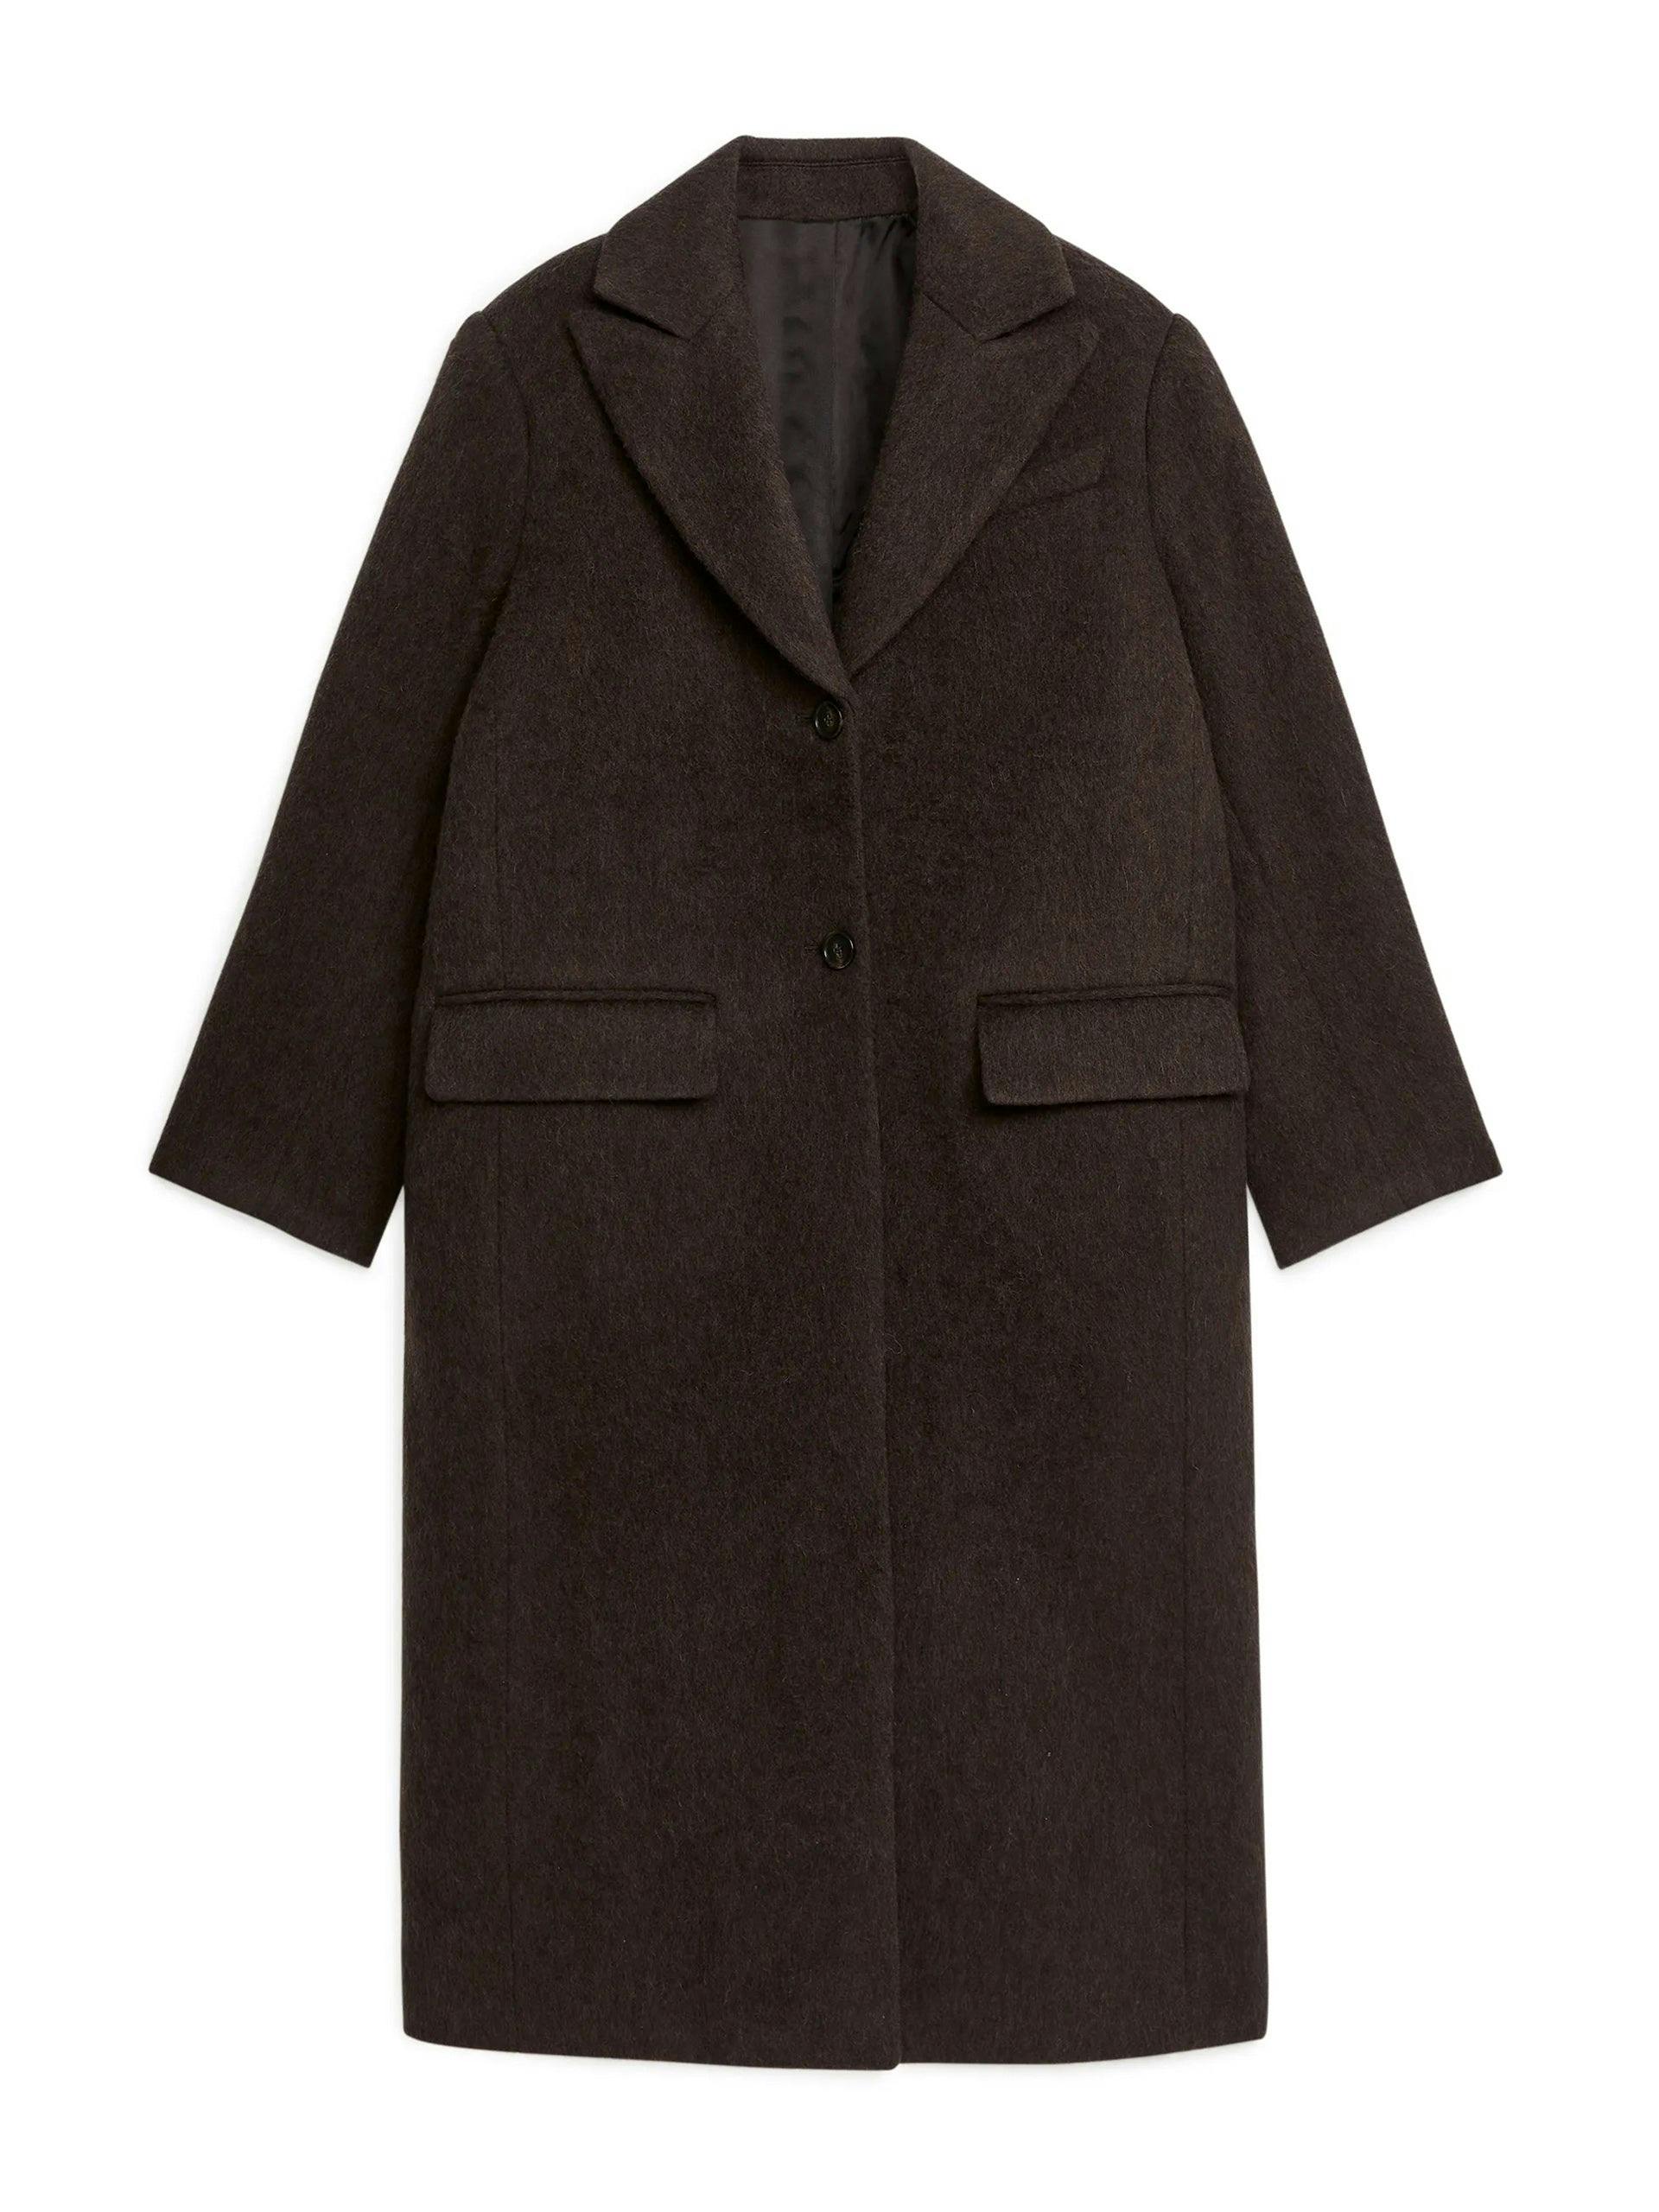 Oversized wool blend coat